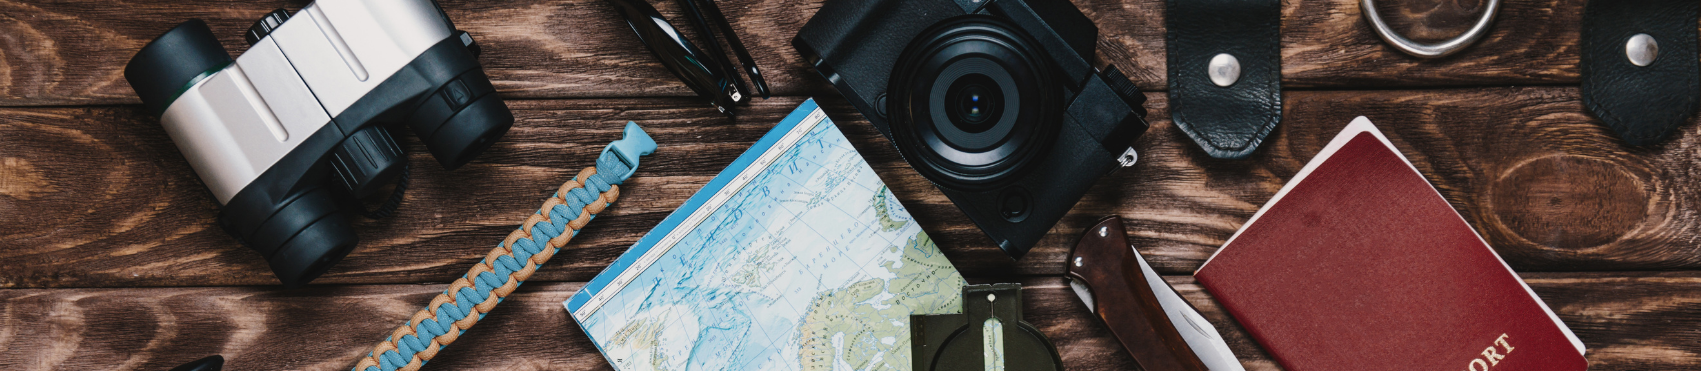 Photo of tourism items: Map, Camera, Passport, Binoculars 